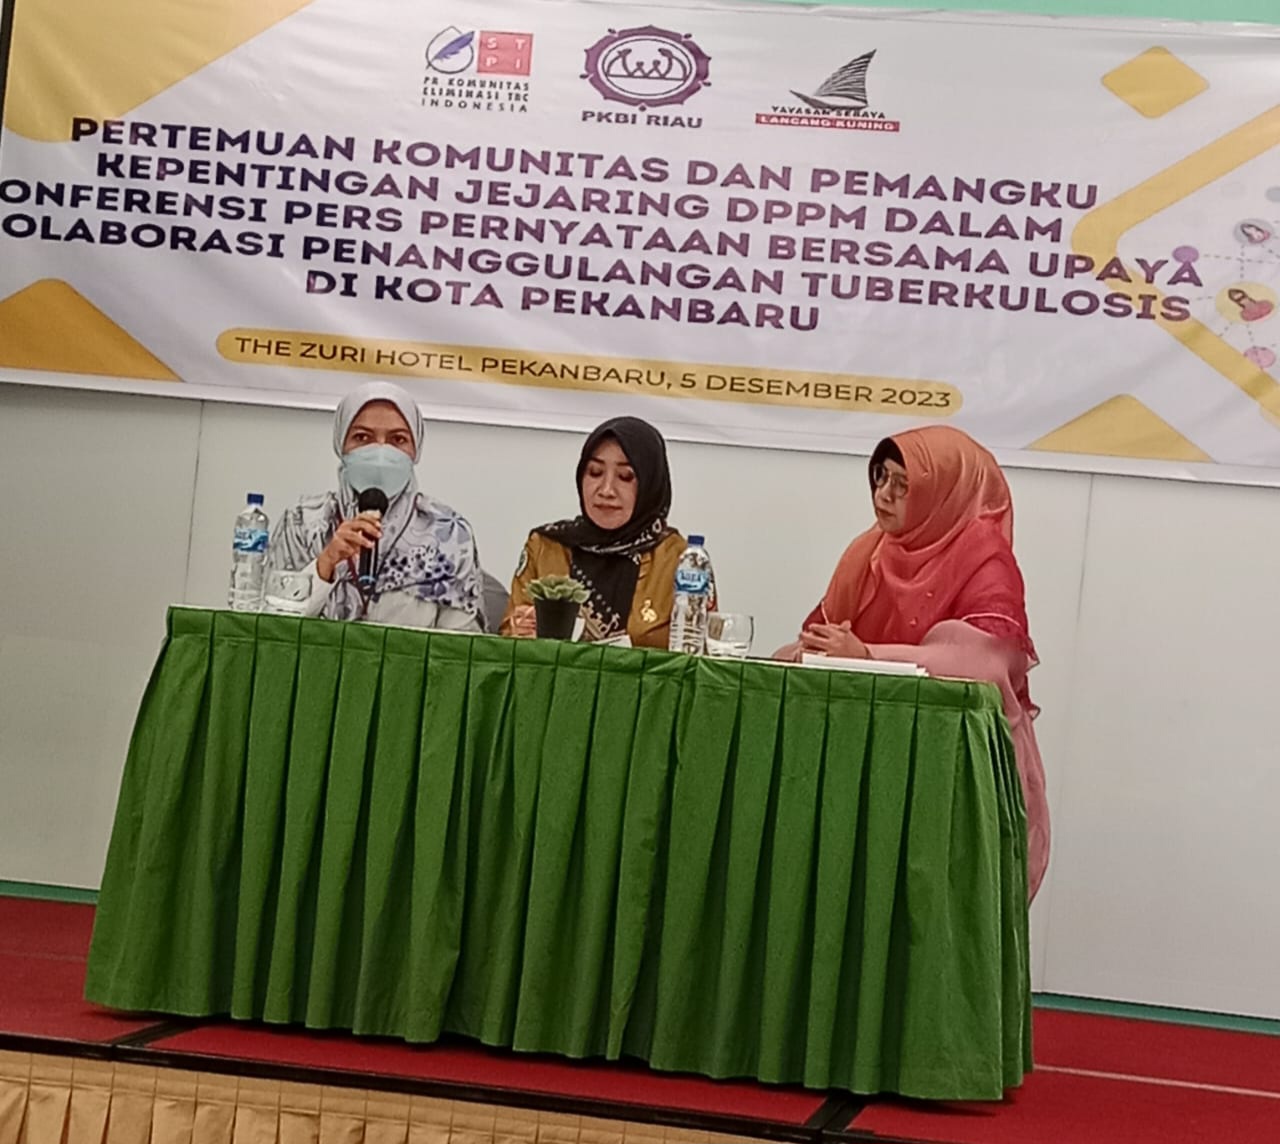 Dukung Eliminasi TBC 2030 di Riau, Komunitas dan Pemangku Kepentingan Terapkan Pendekatan DPPM